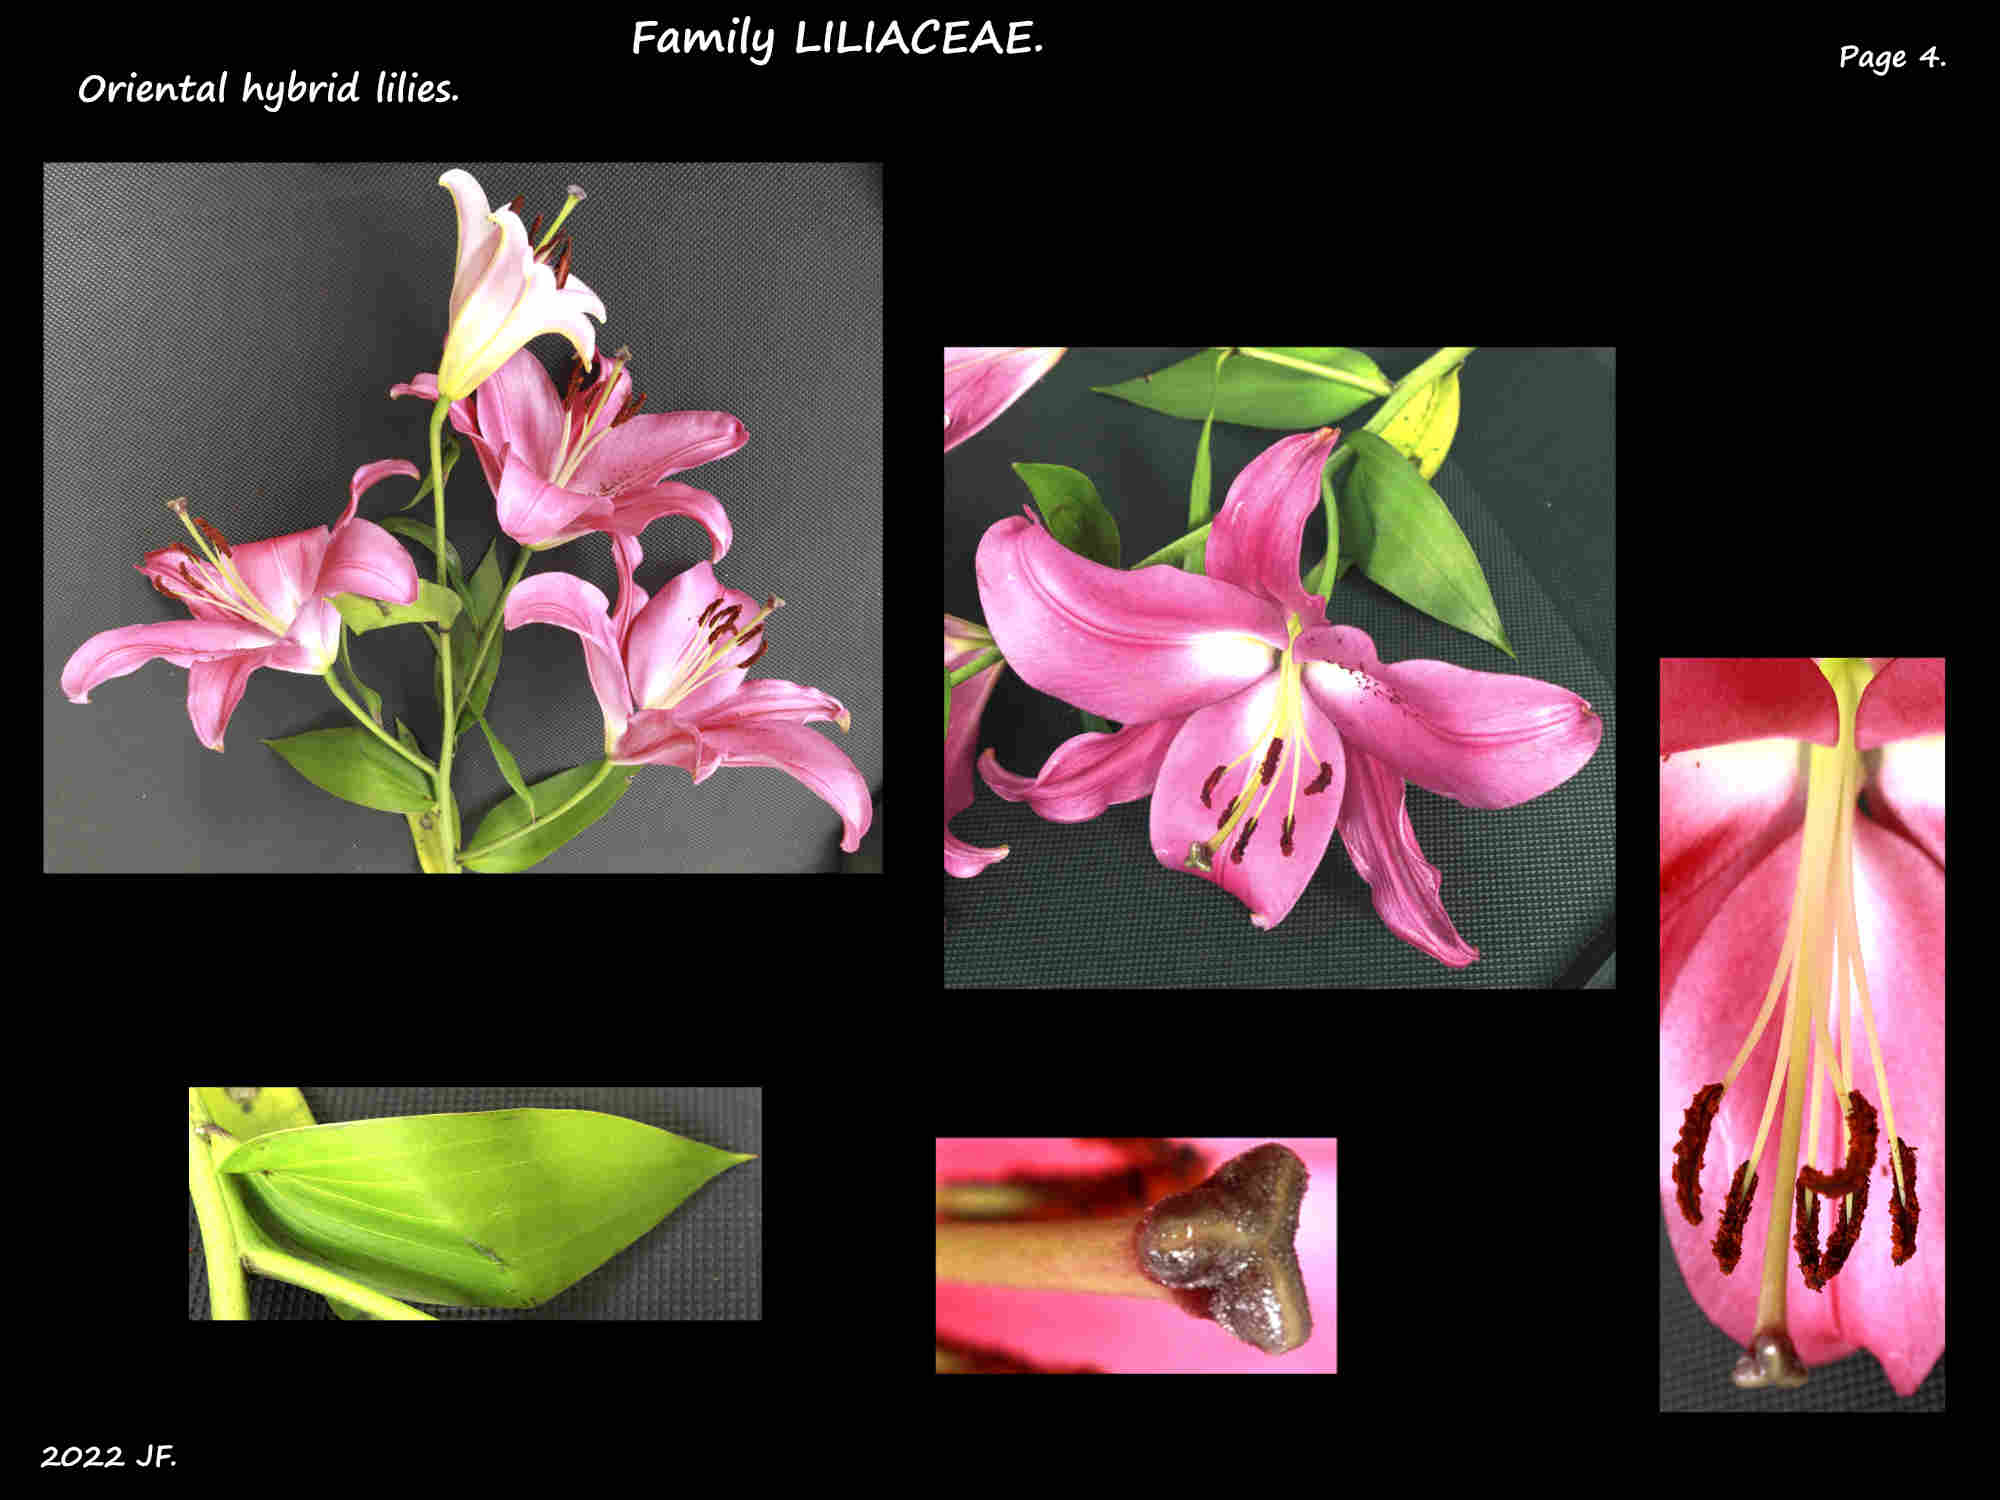 4 Red Oriental hybrid lilies